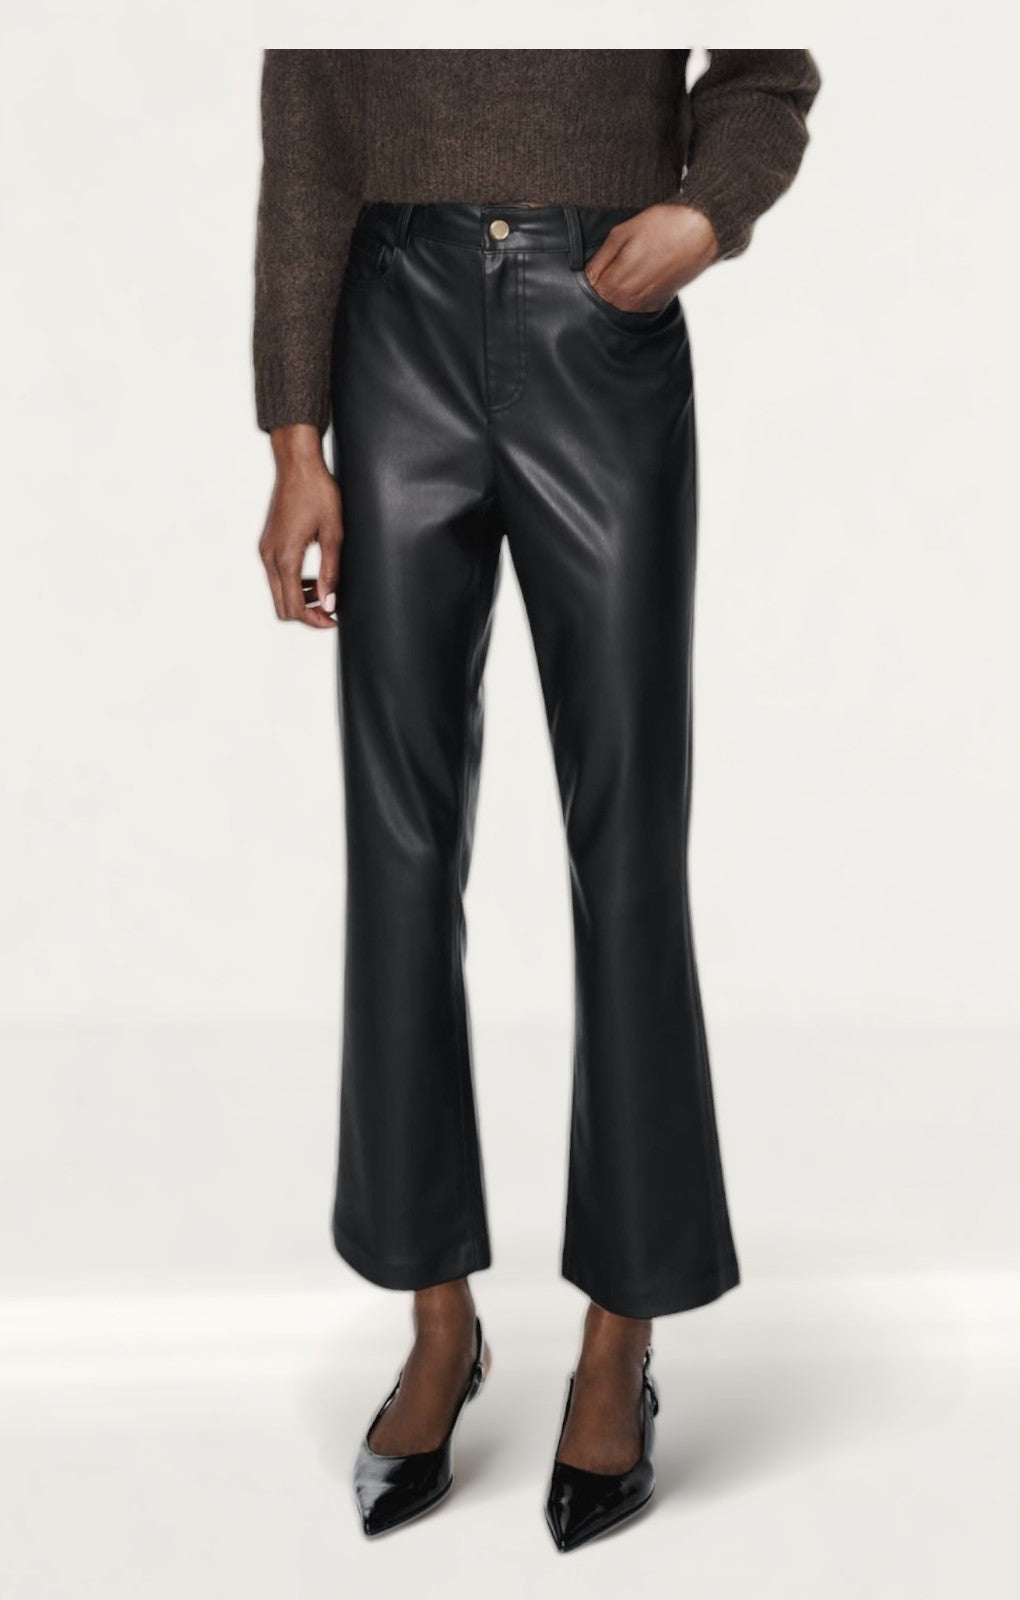 Zara Trafaluc Leather Look trousers Size S | eBay